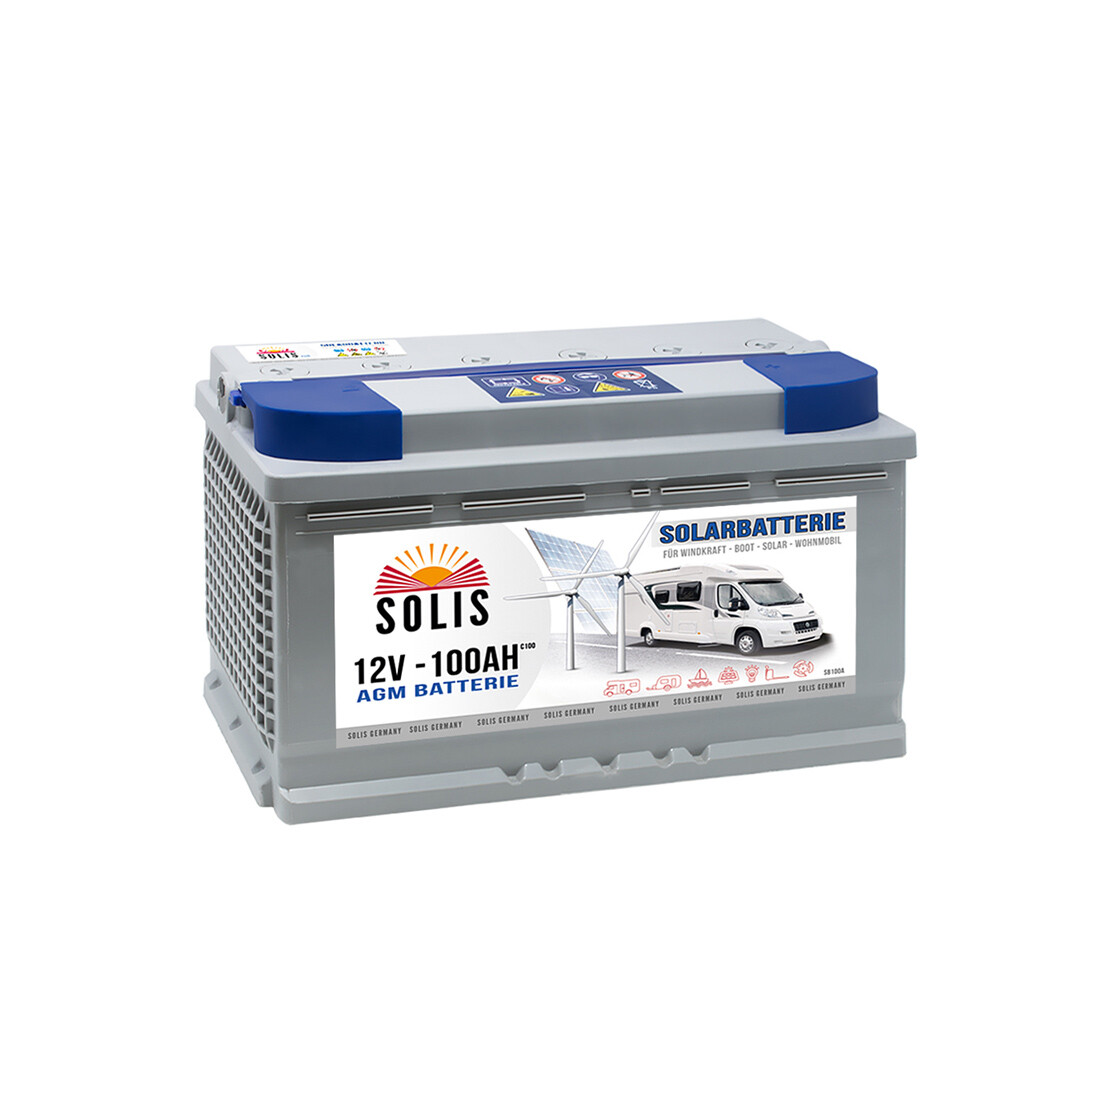 Solis Solarbatterie AGM 100Ah 12V, 167,98 €